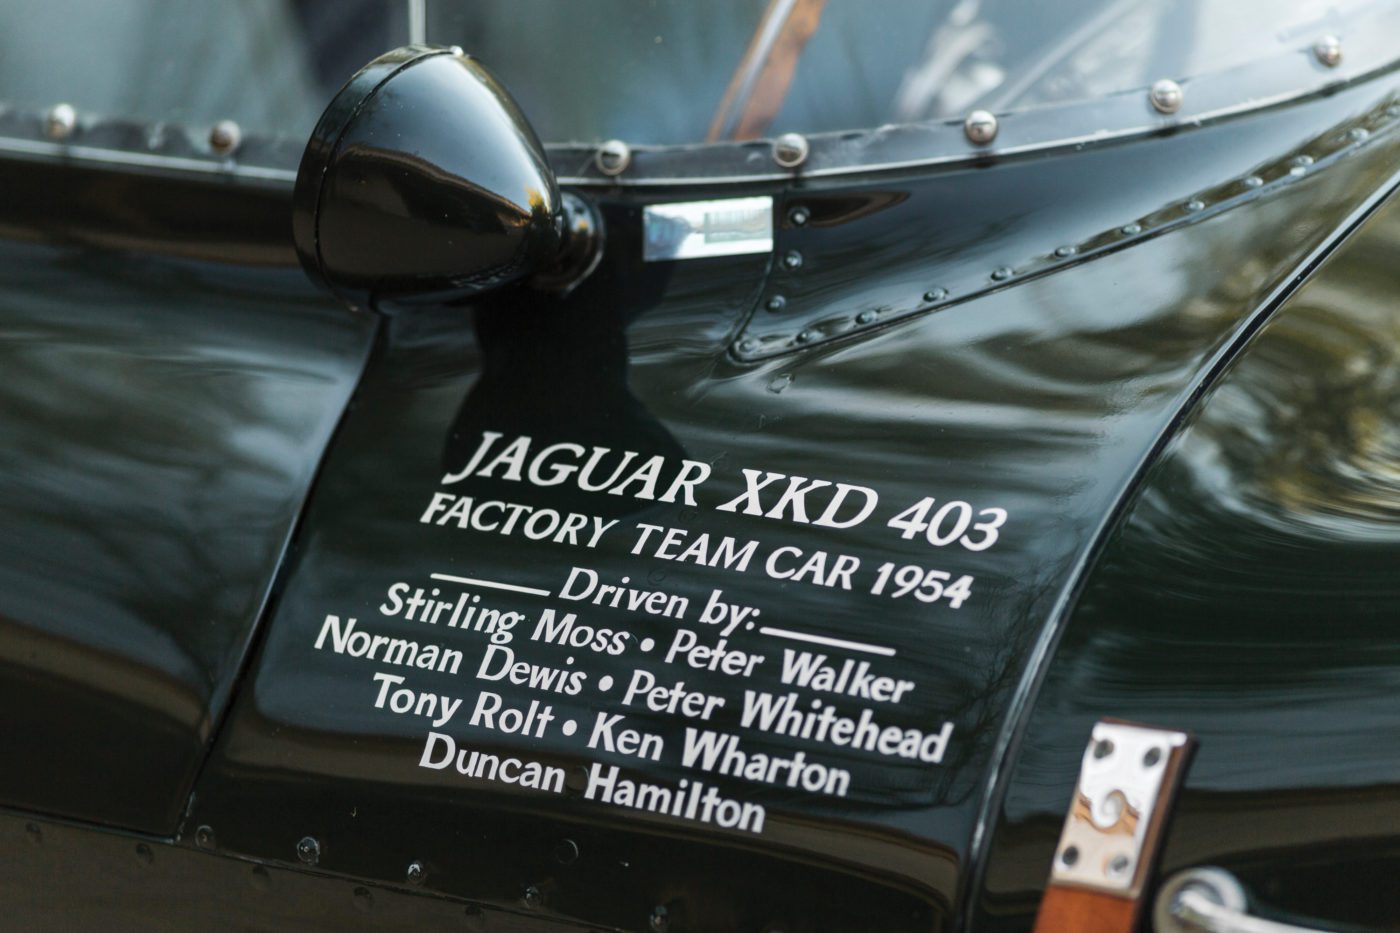 #662 made in france Cadum pax 1/66 jaguar type d le mans 1954 250 cv to choice 